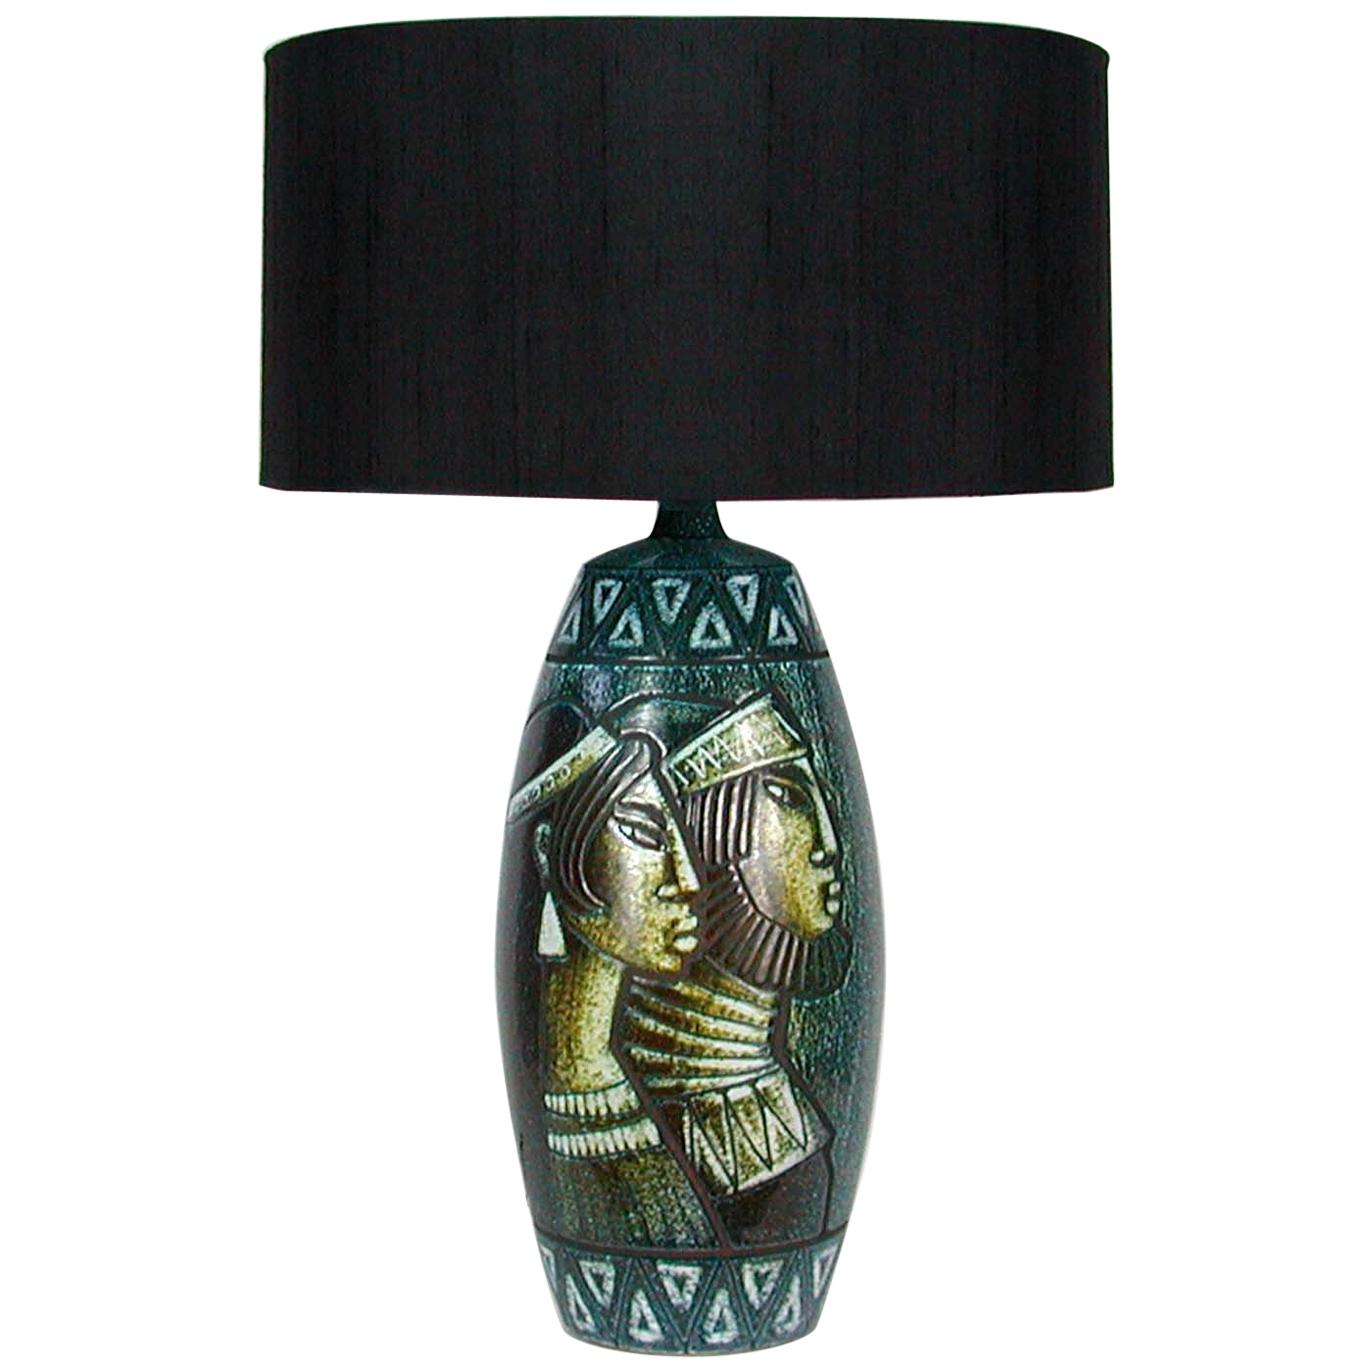 Midcentury Swedish Ceramic Table Lamp, Bonnie Rehnkvist for Falkenbergs, 1960s For Sale